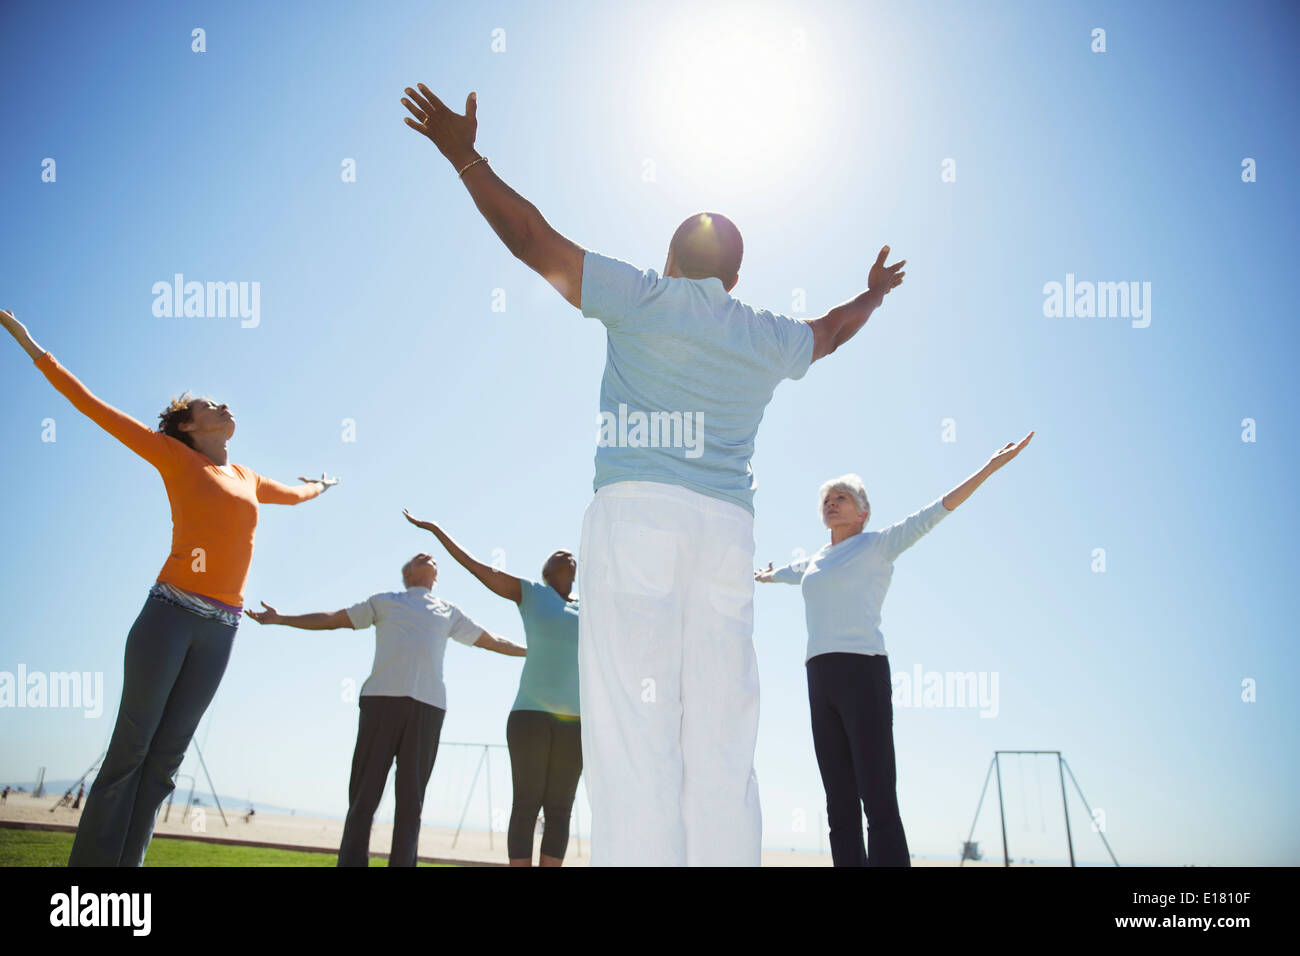 Senioren Yoga unter sonnigen blauen Himmel zu praktizieren Stockfoto